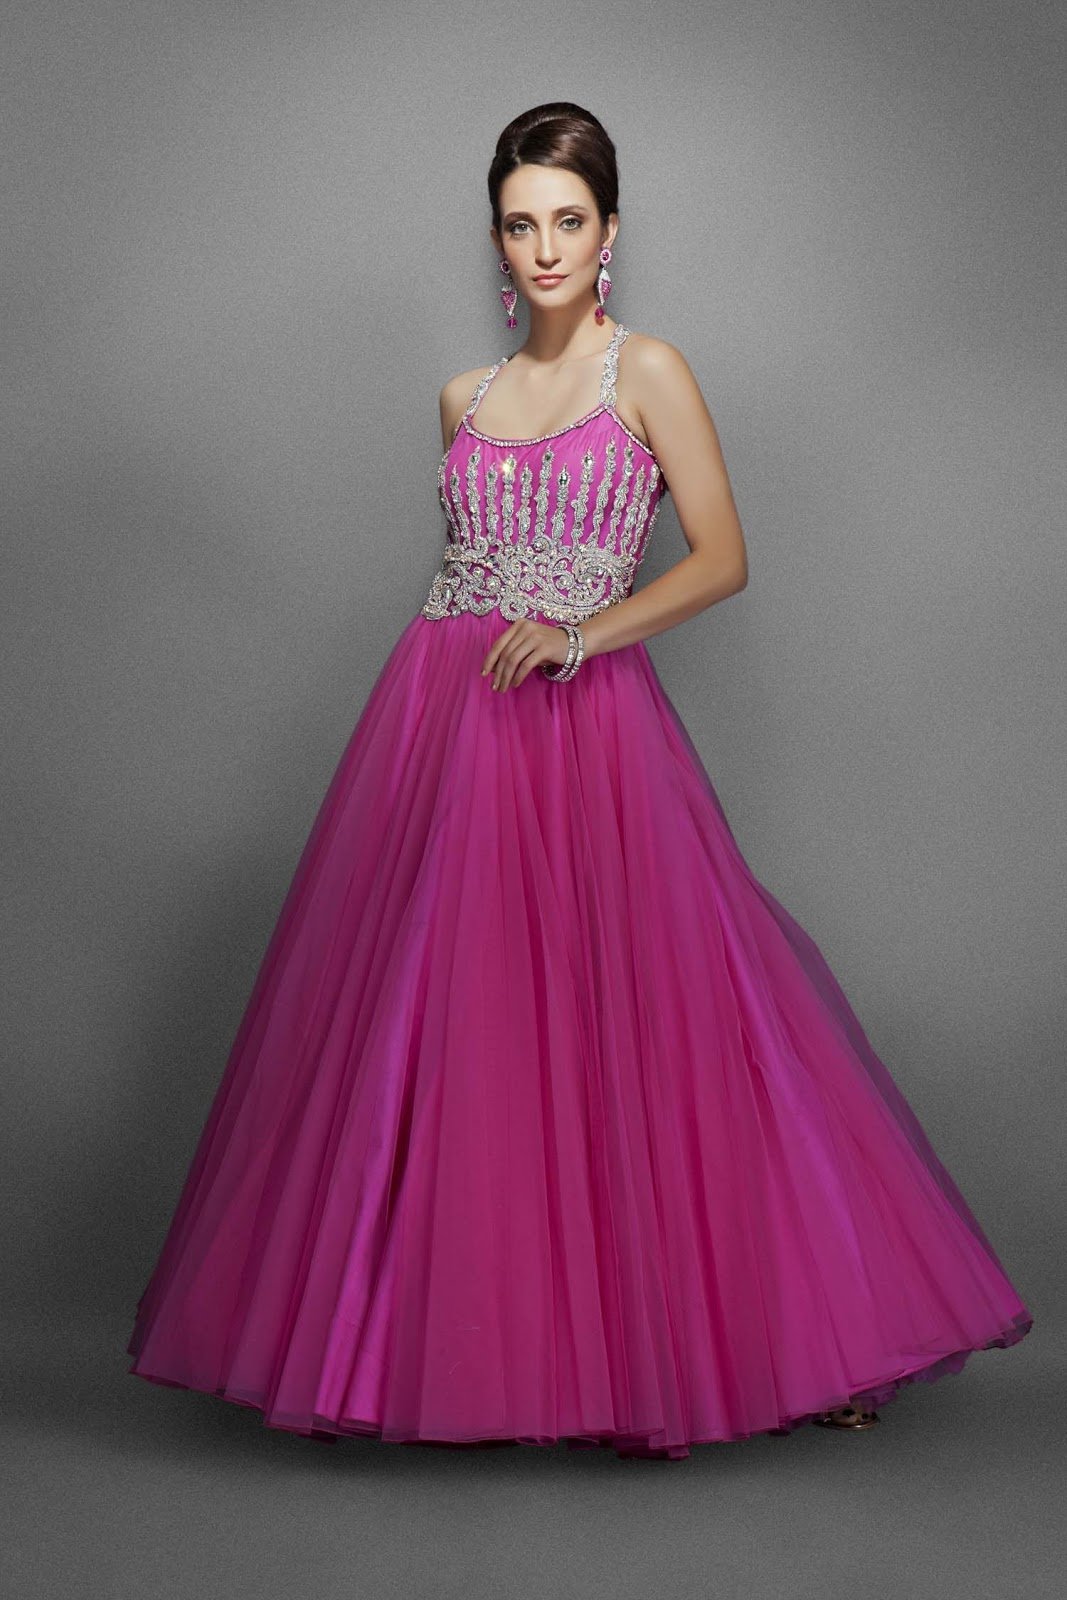 gaun dress pink